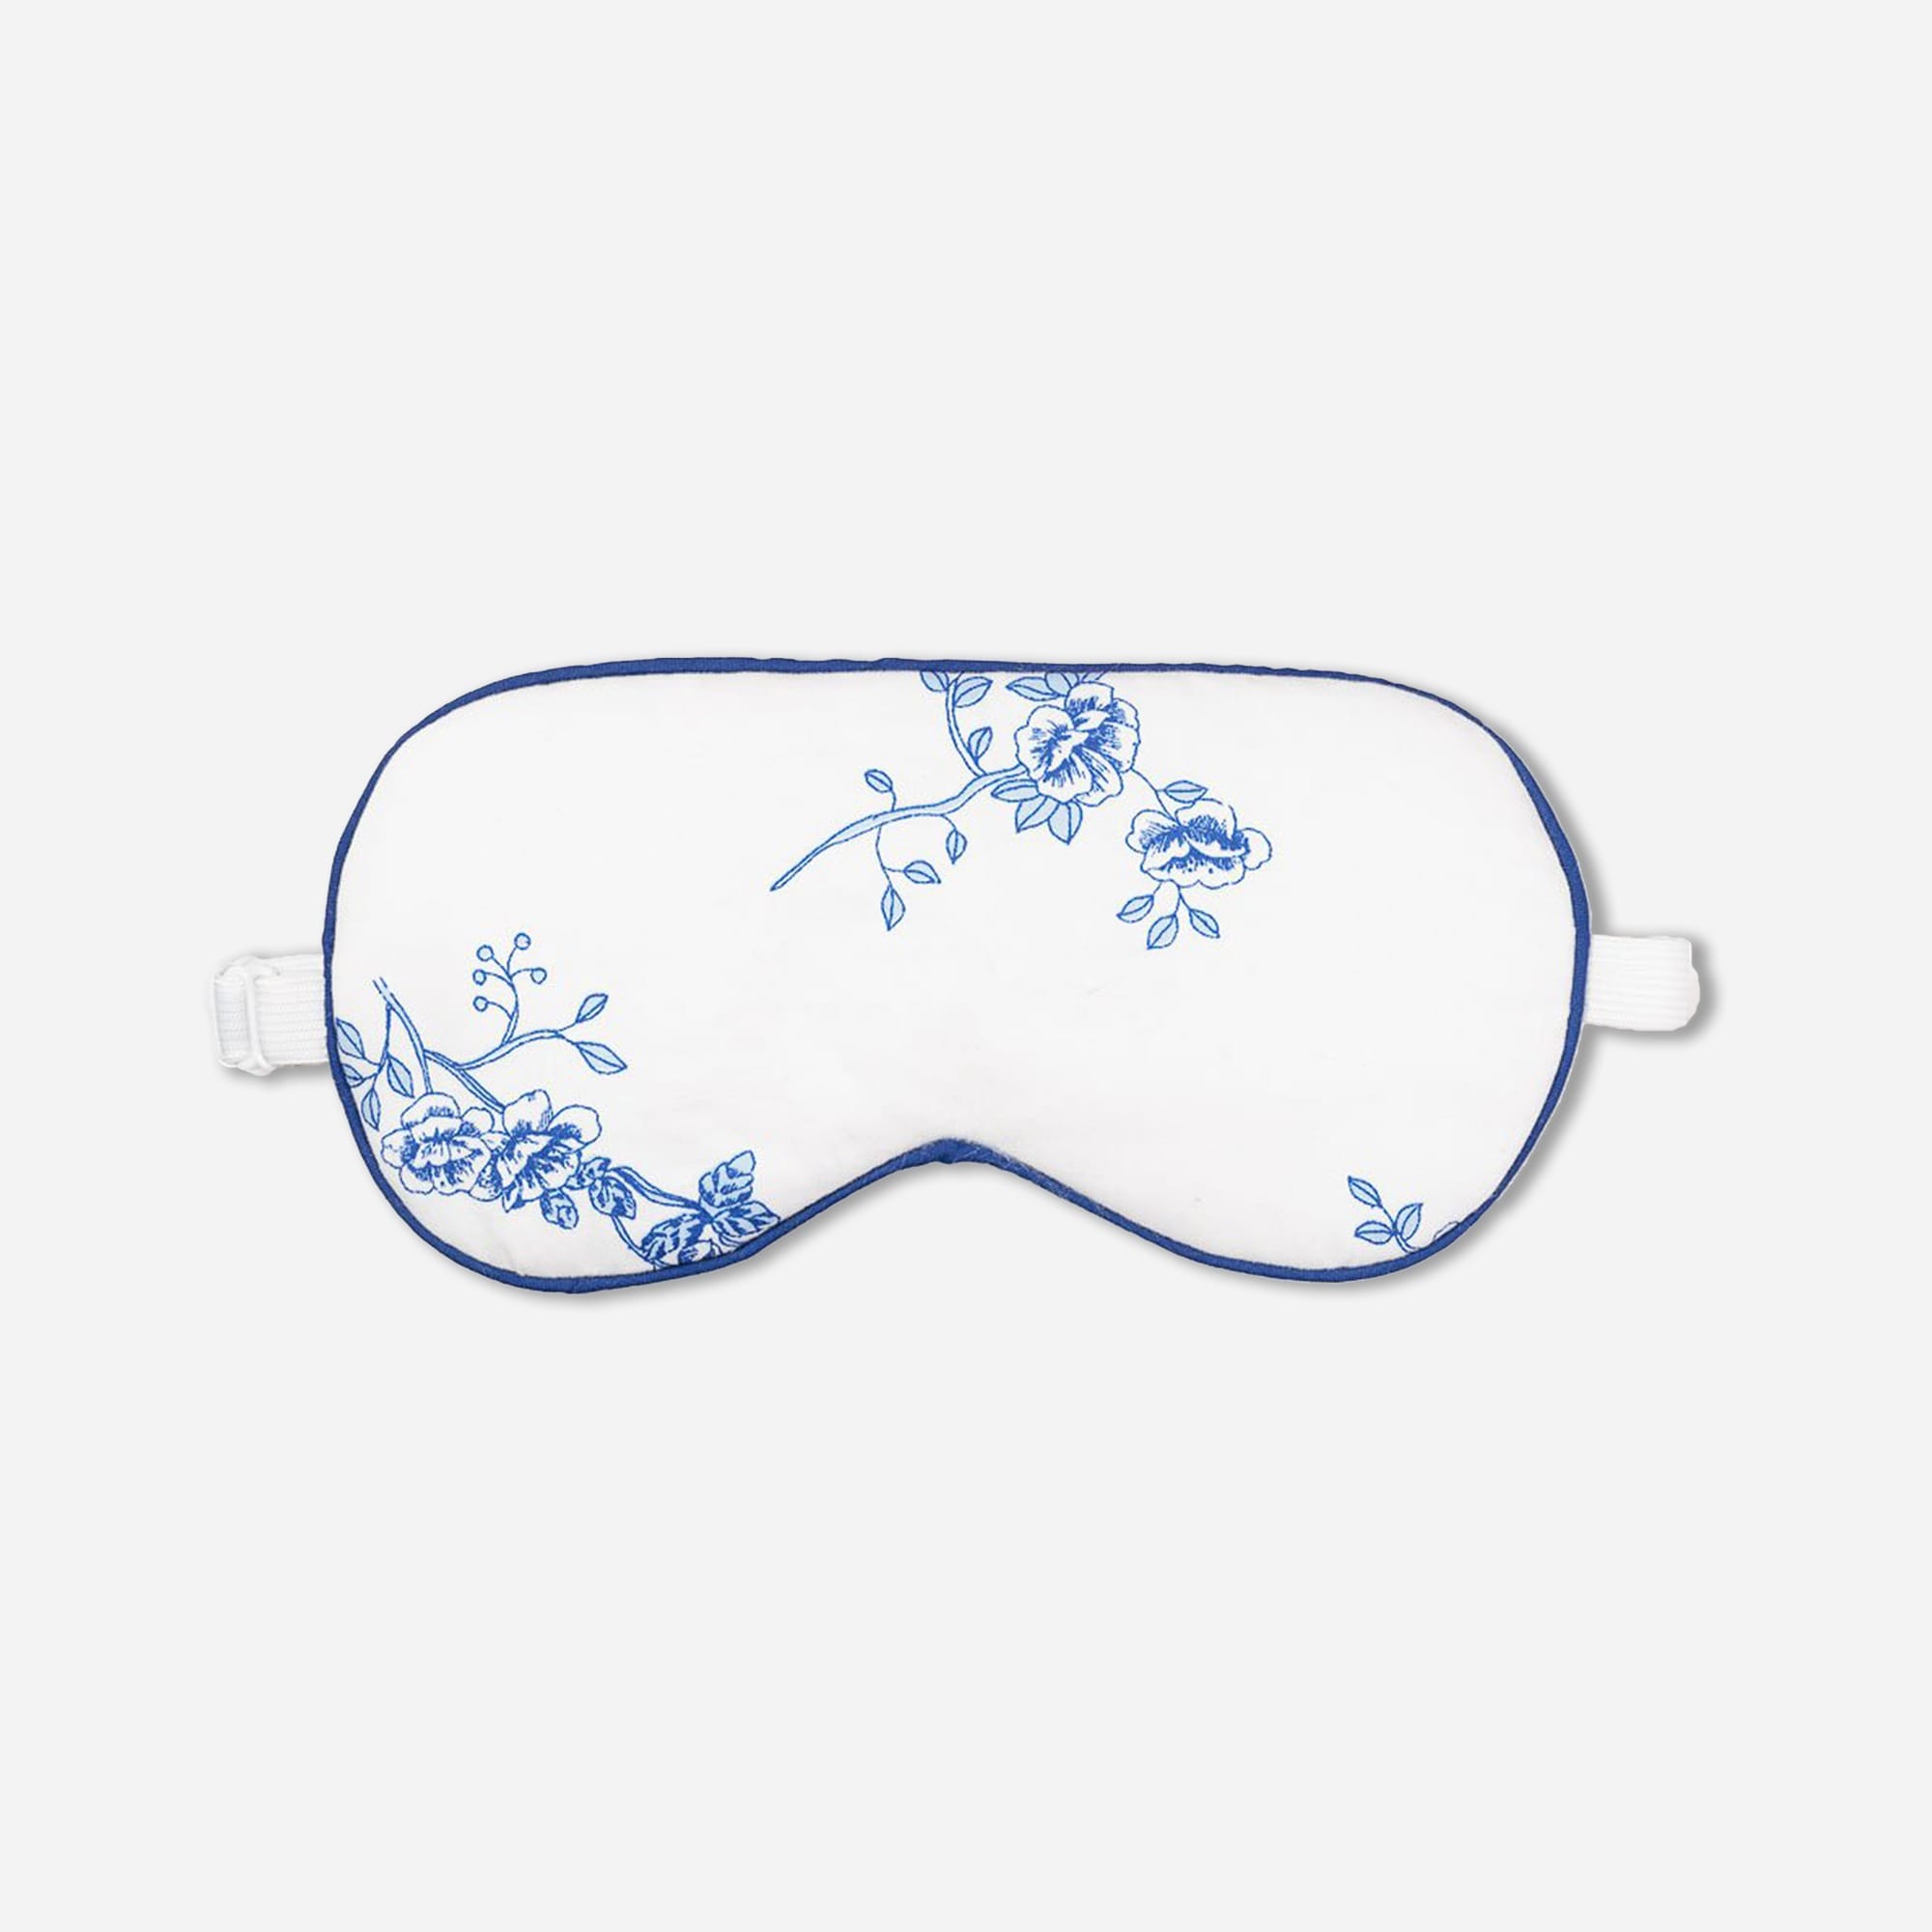  Petite Plume™ women's traditional eye mask set